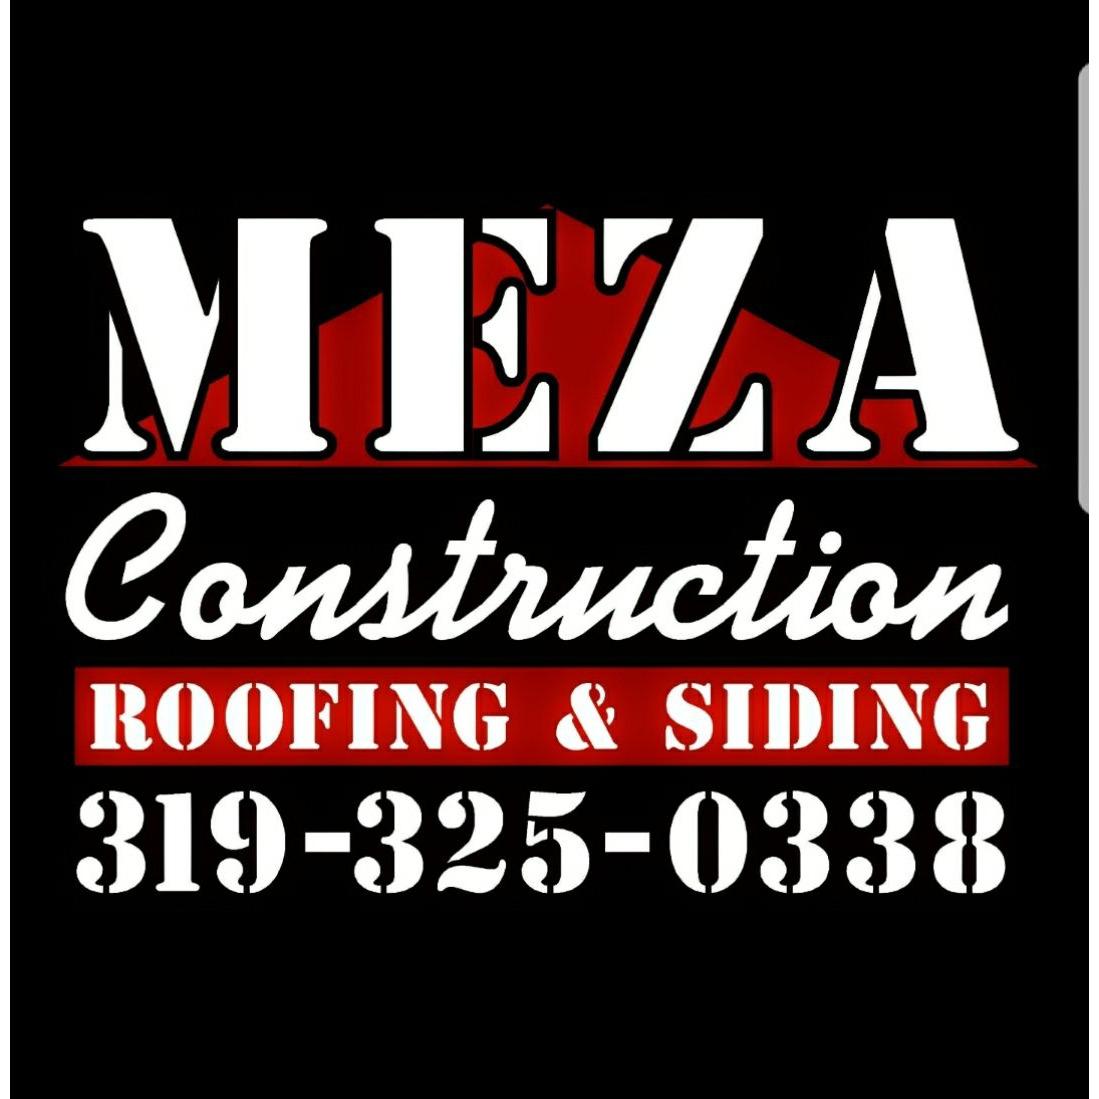 Meza Construction Inc - West Liberty, IA - (319)325-0338 | ShowMeLocal.com